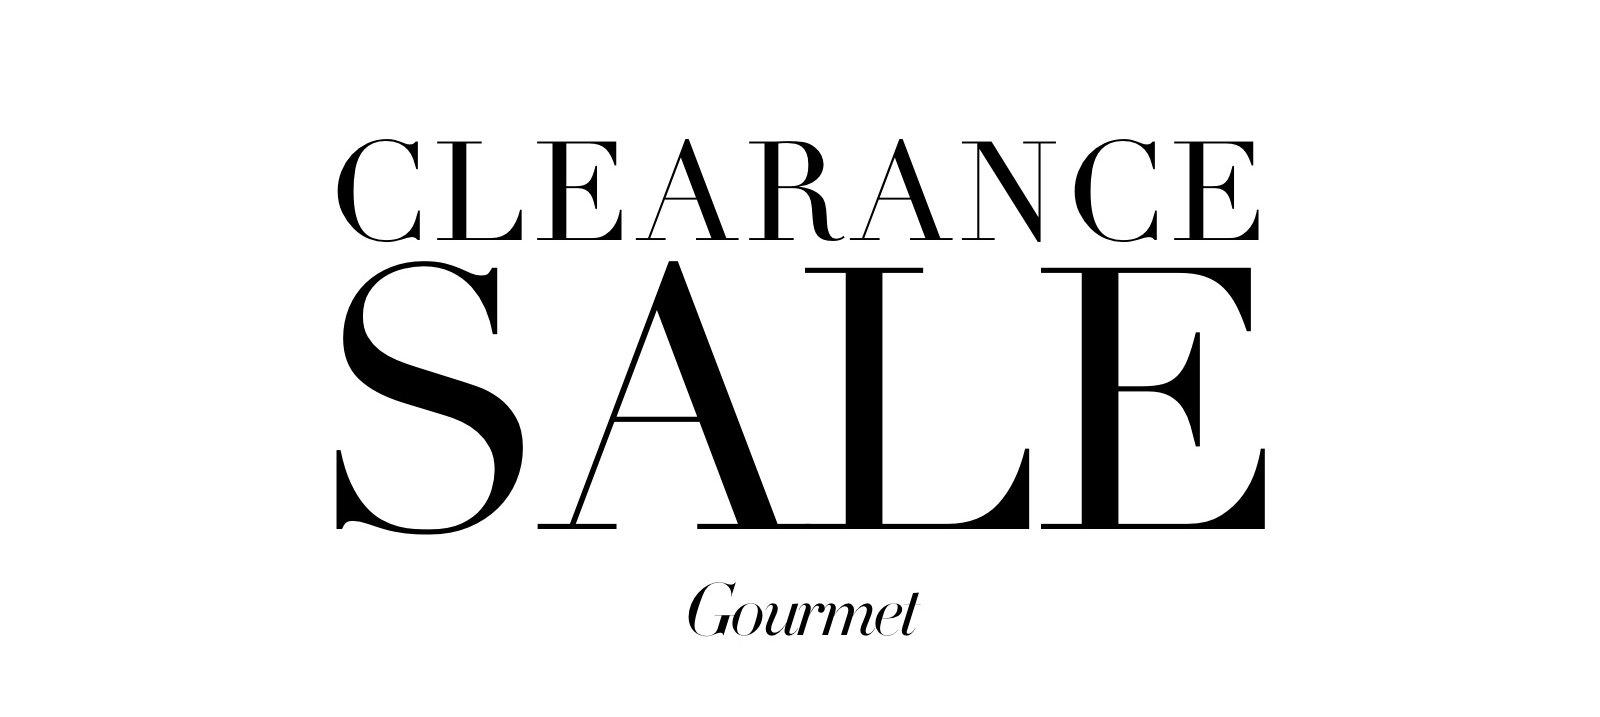 Clearance sale：Gourmet